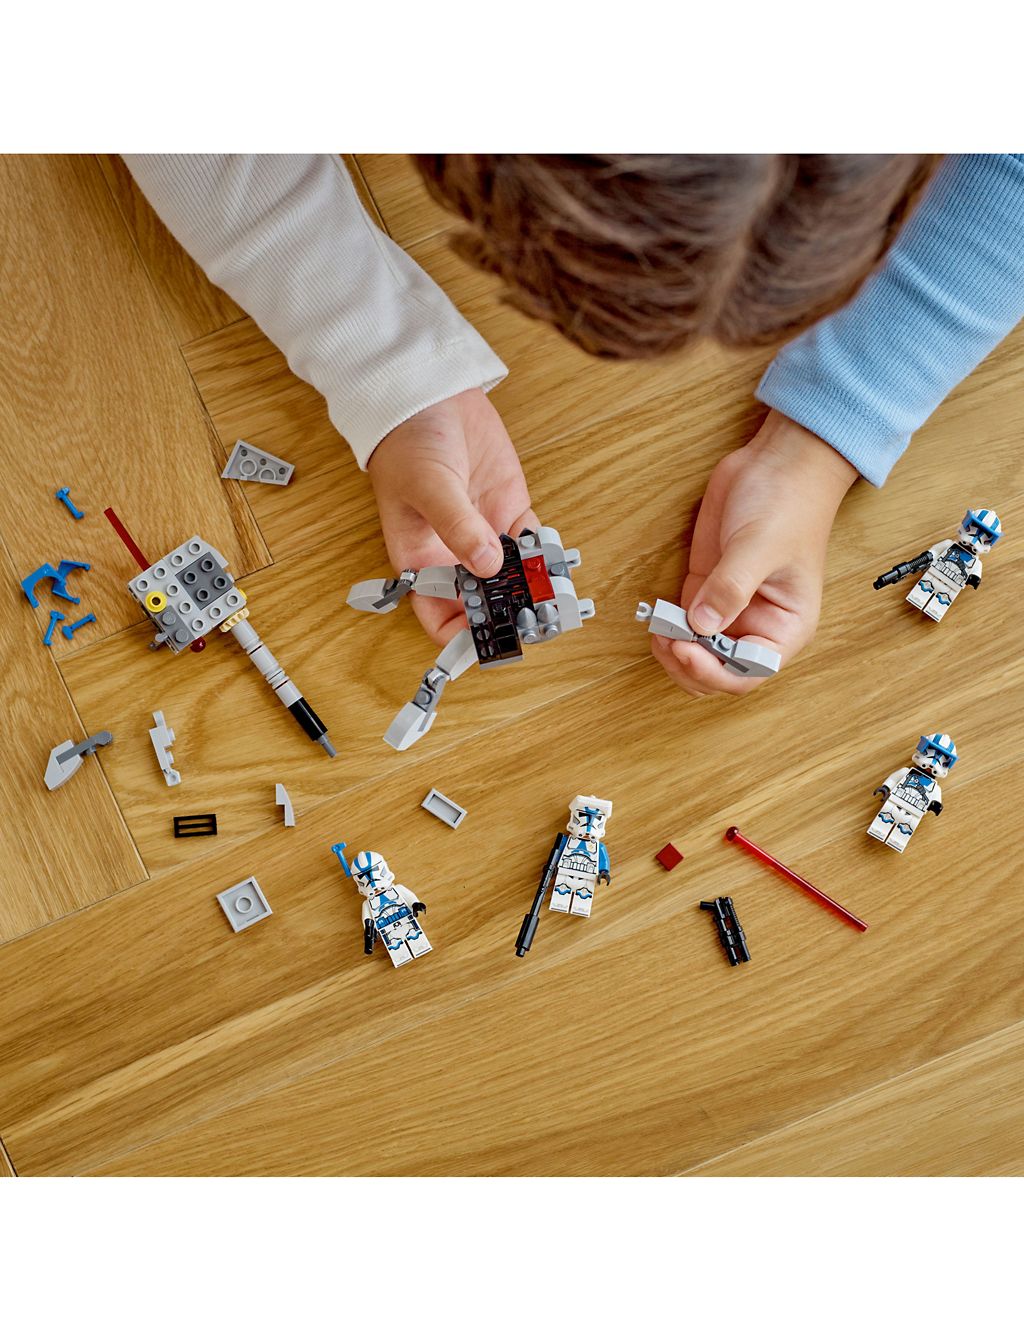 LEGO Star Wars 501st Clone Trooper Battle Pack 75345 (6+Yrs) 4 of 7